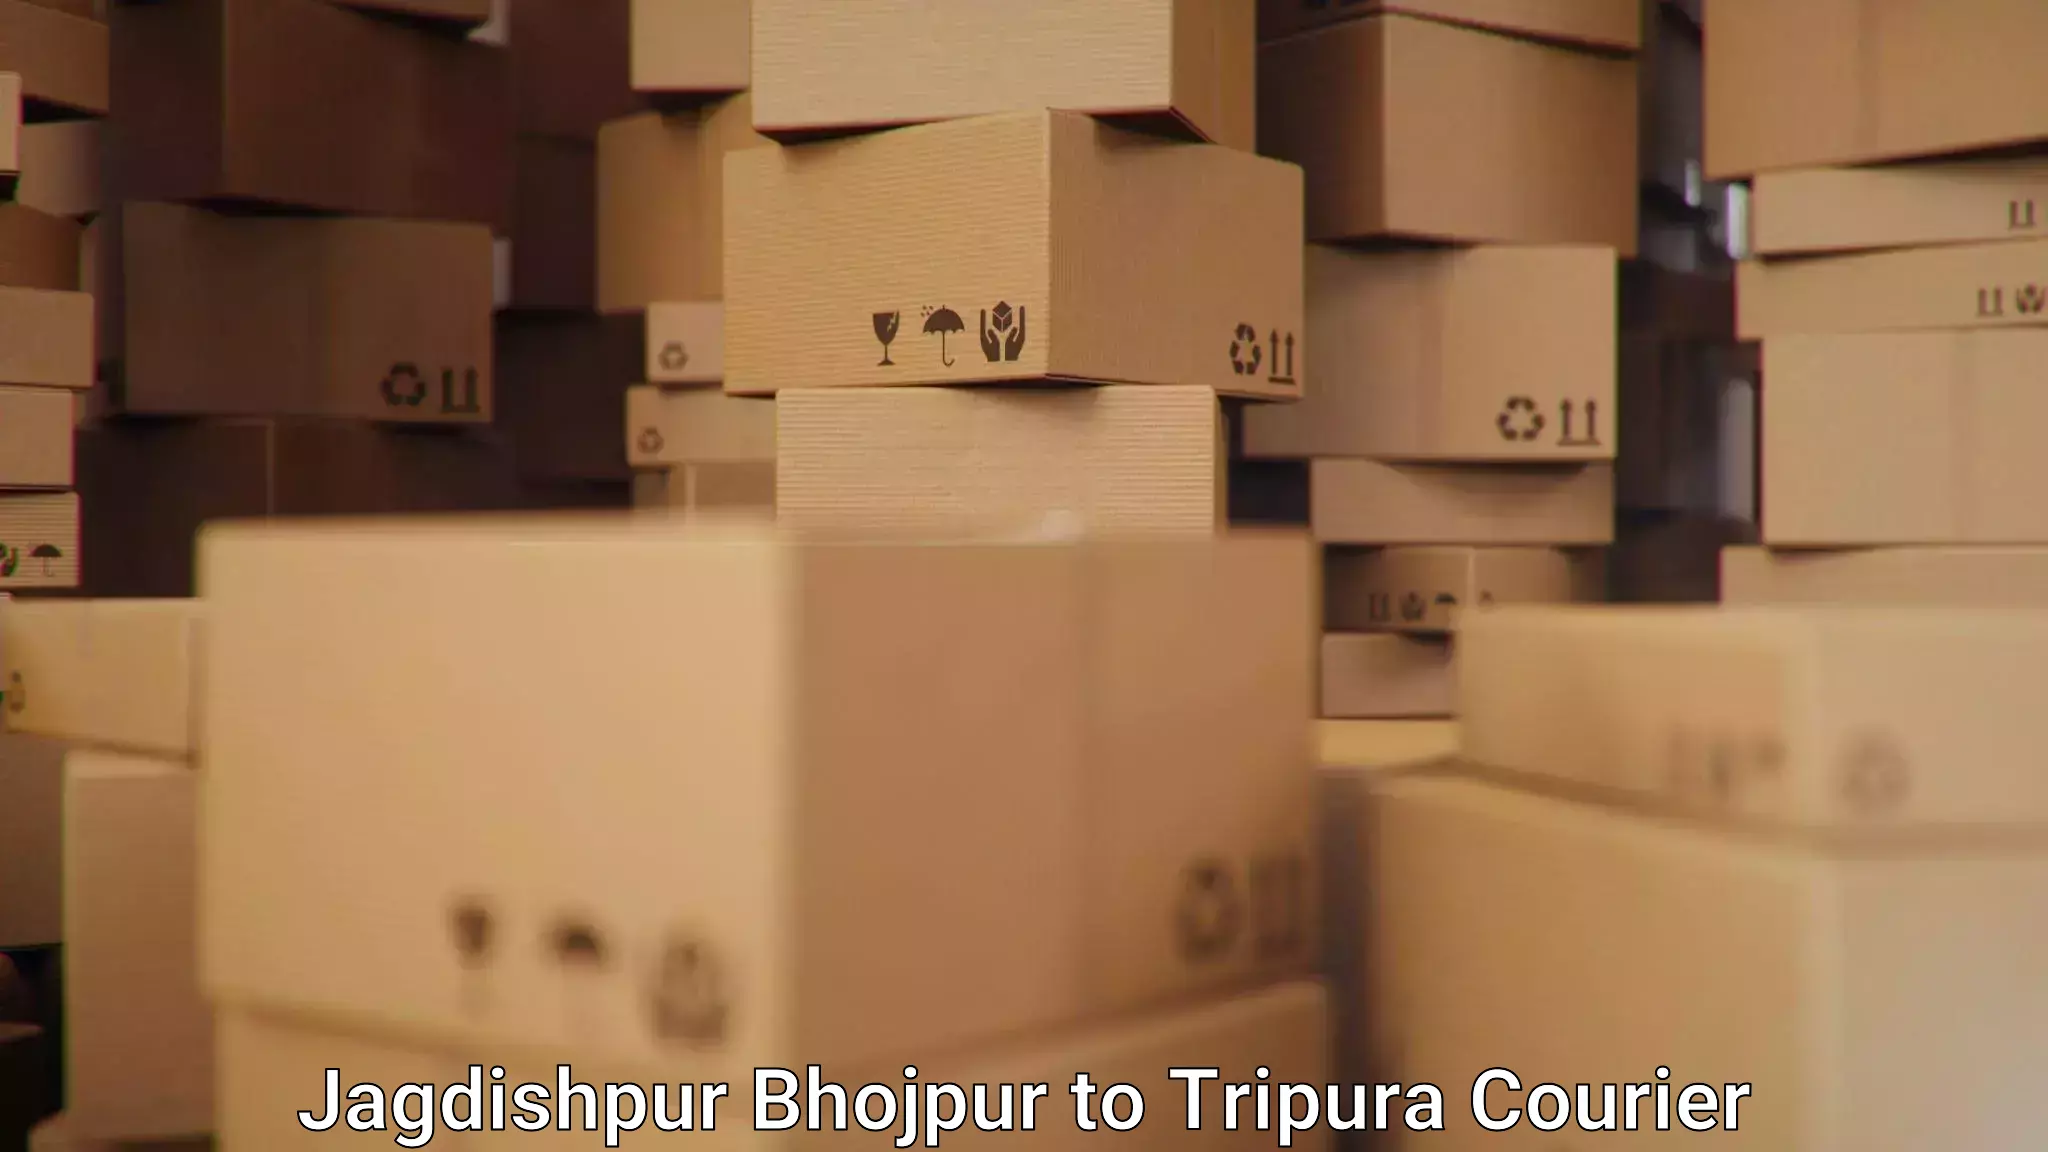 Quick dispatch service Jagdishpur Bhojpur to Dhalai